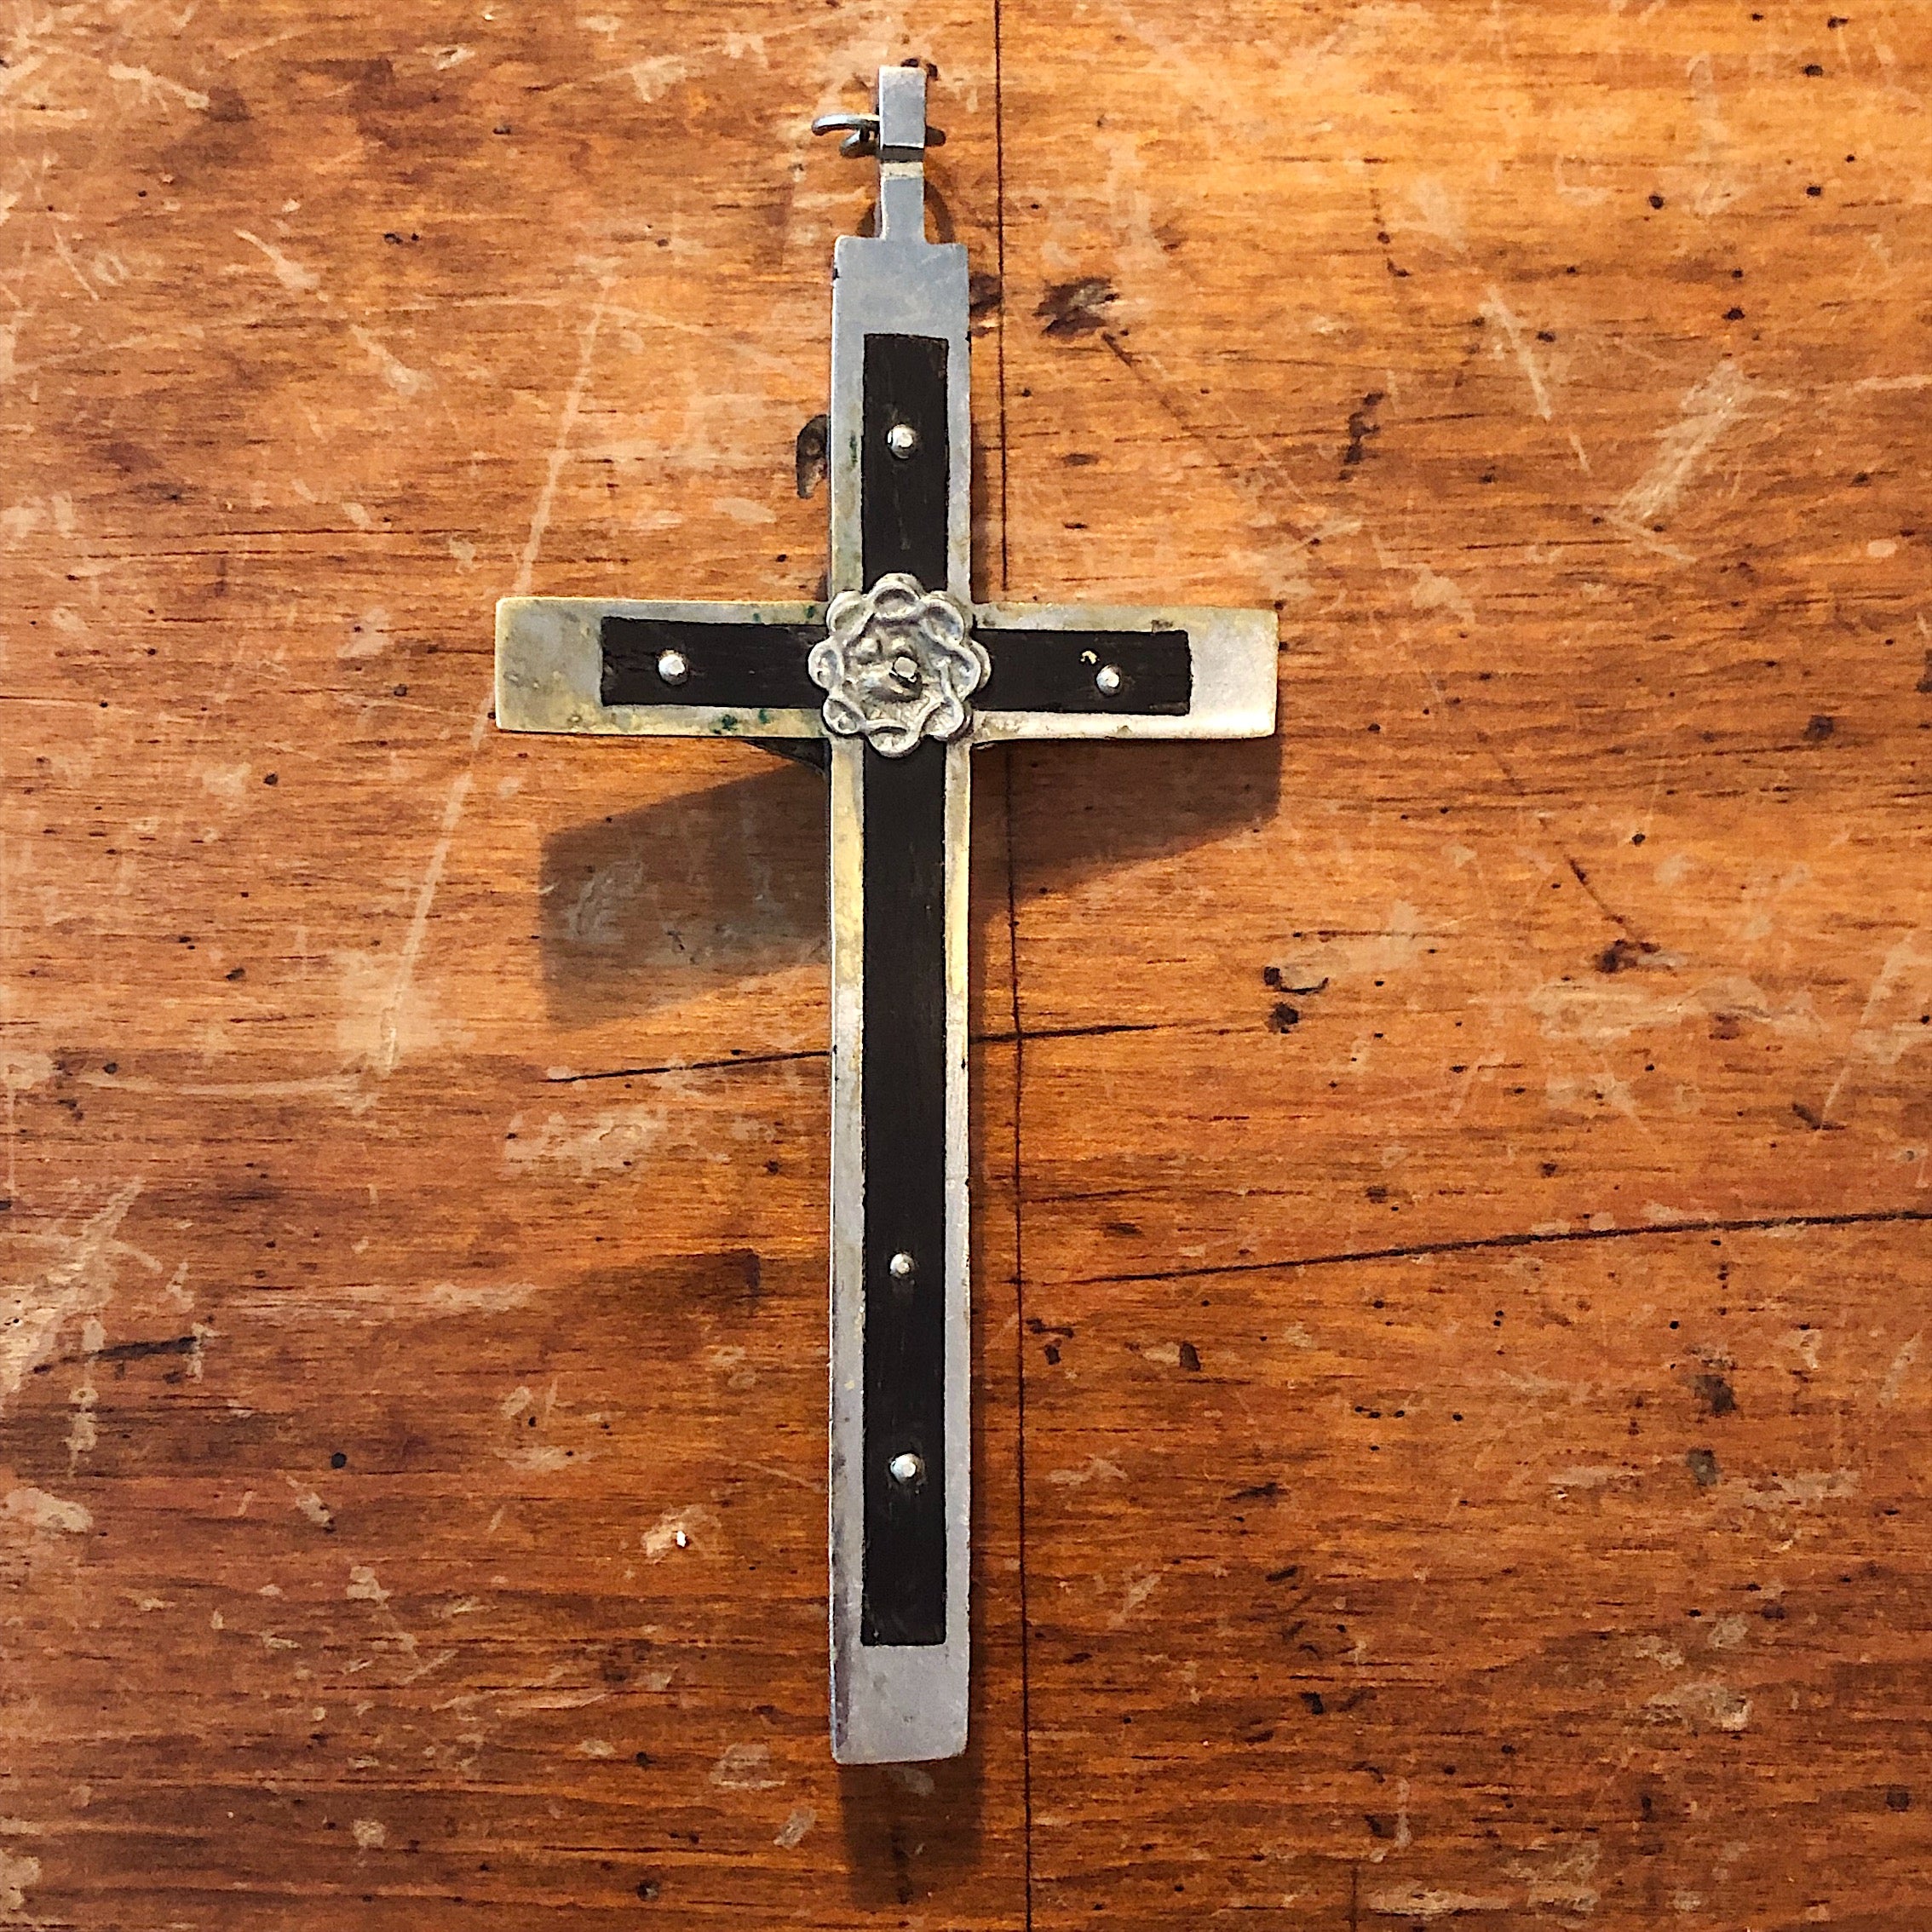 Antique Nickel Crucifix with Skull and Crossbones